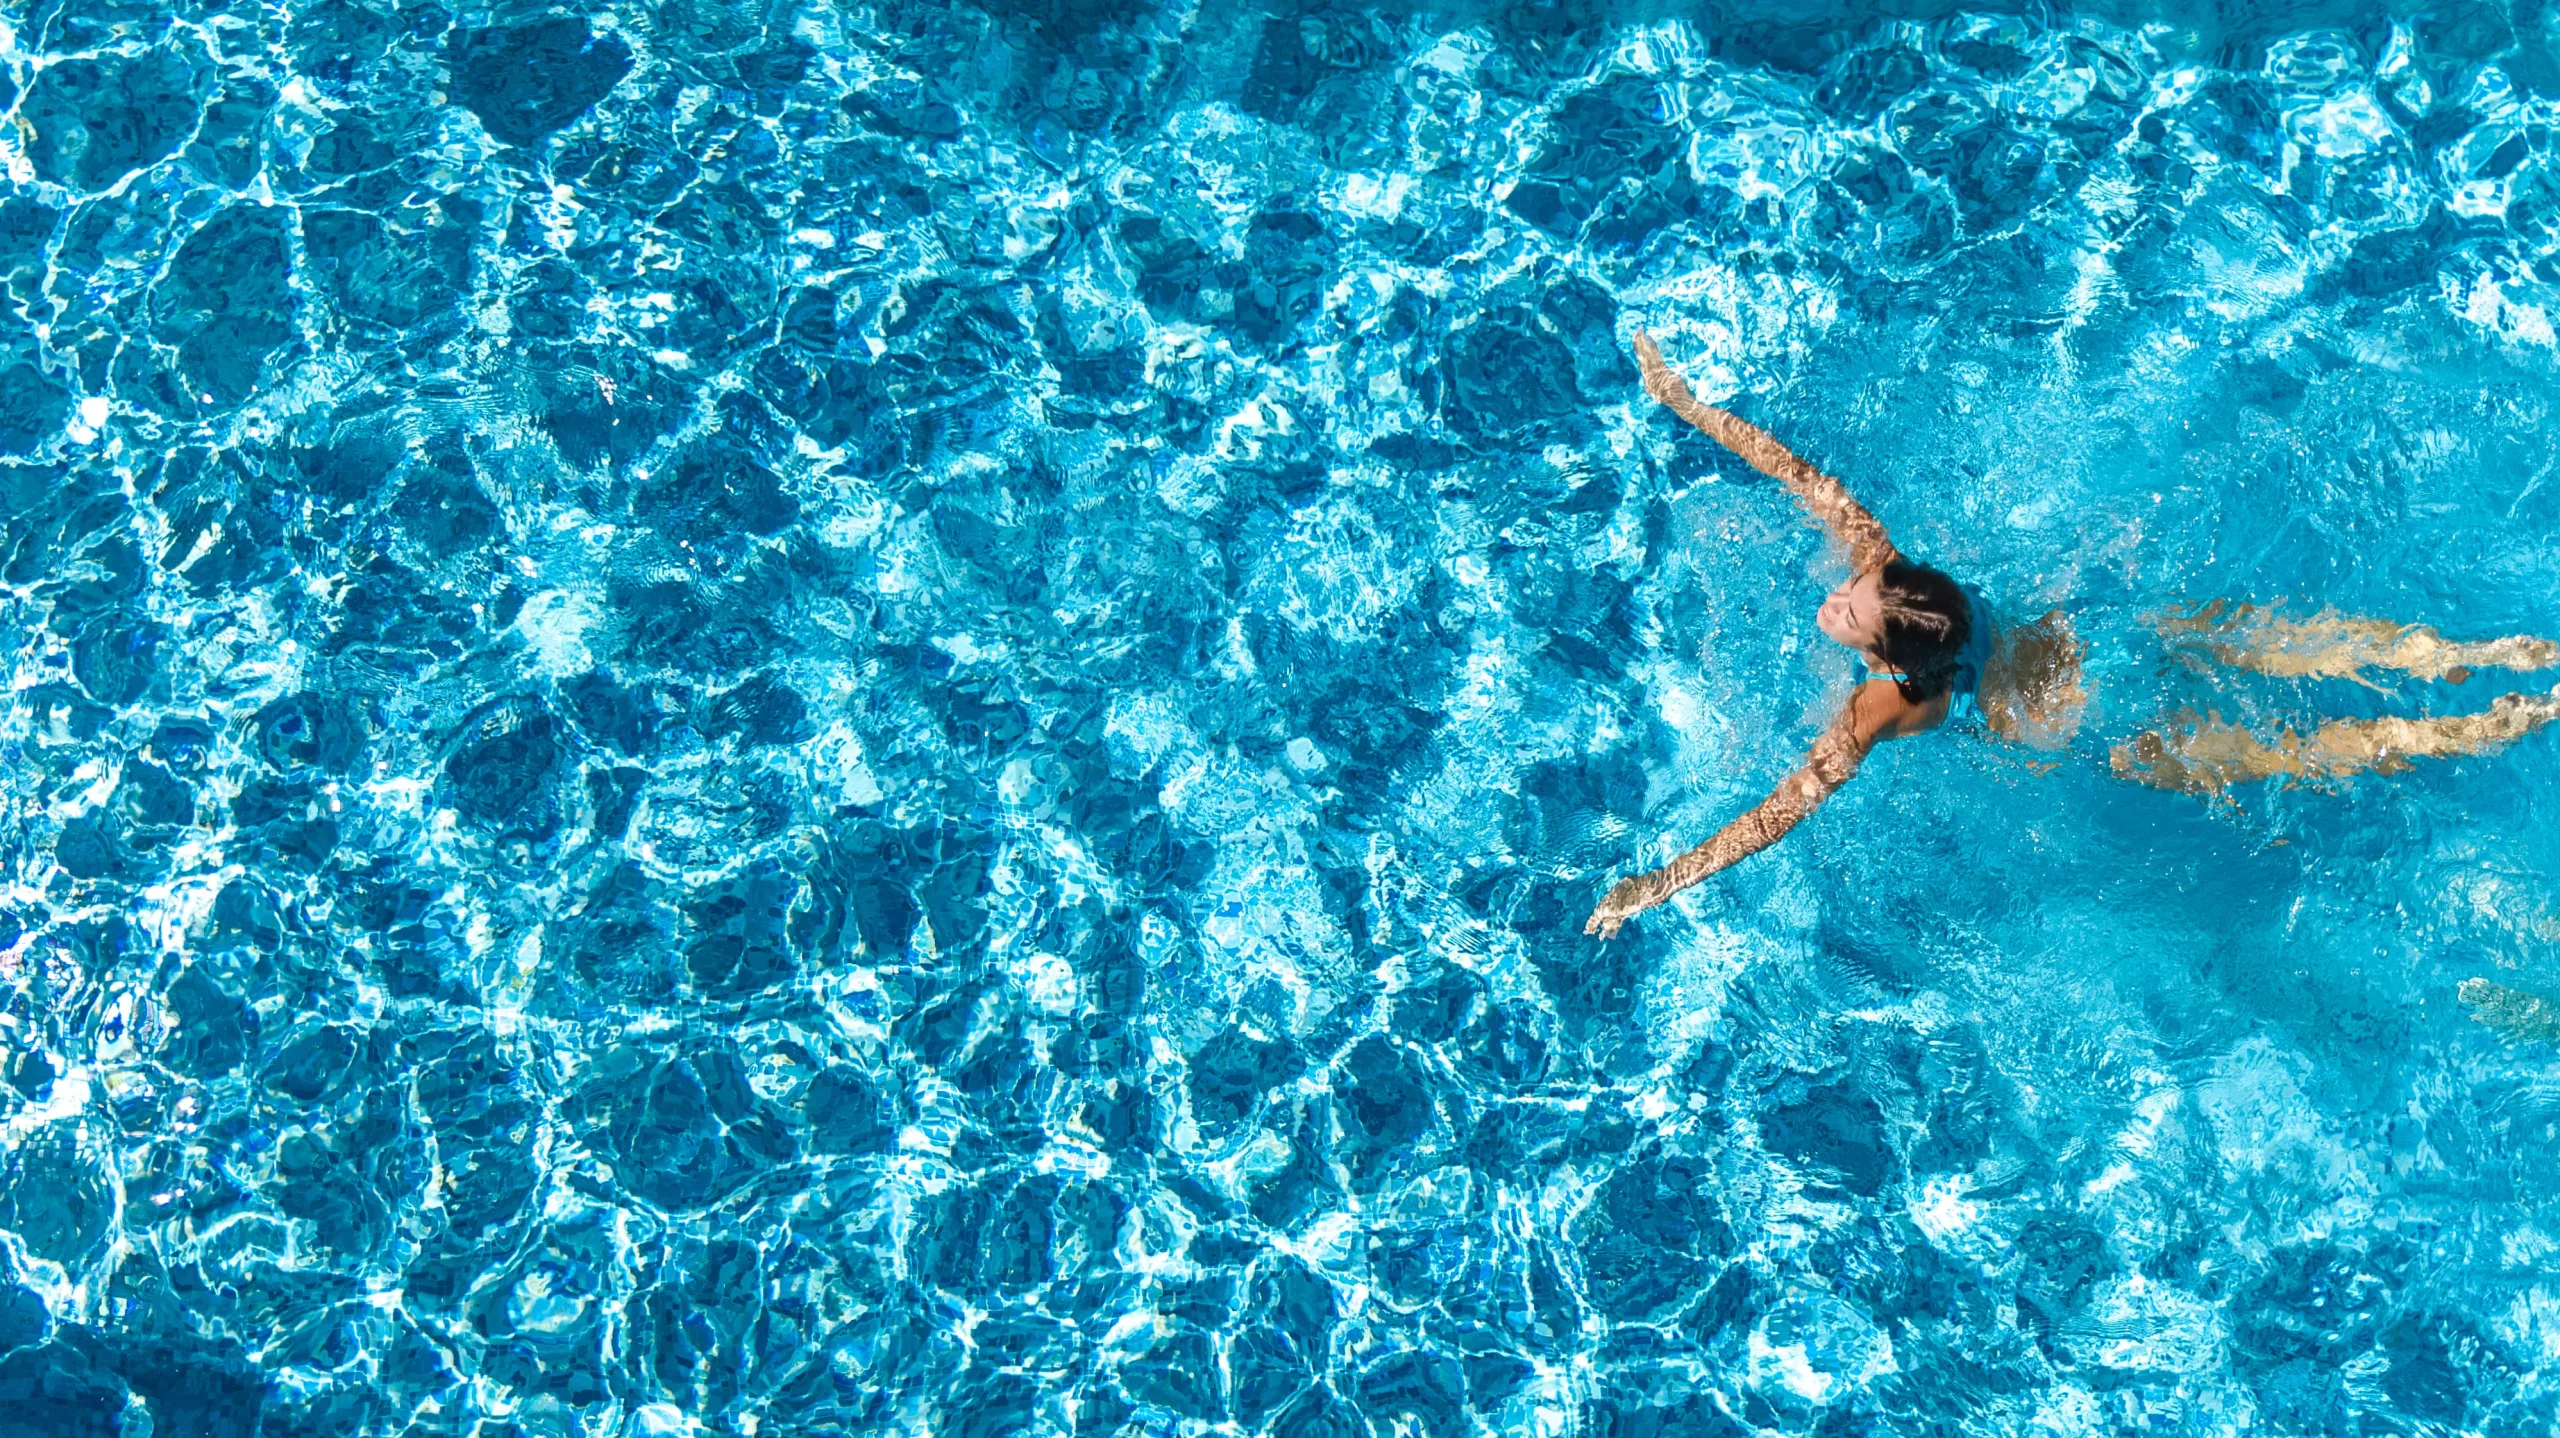 Woman in blue bikini swimming in a pool aerial view photo. She has long brown hair and fair skin.